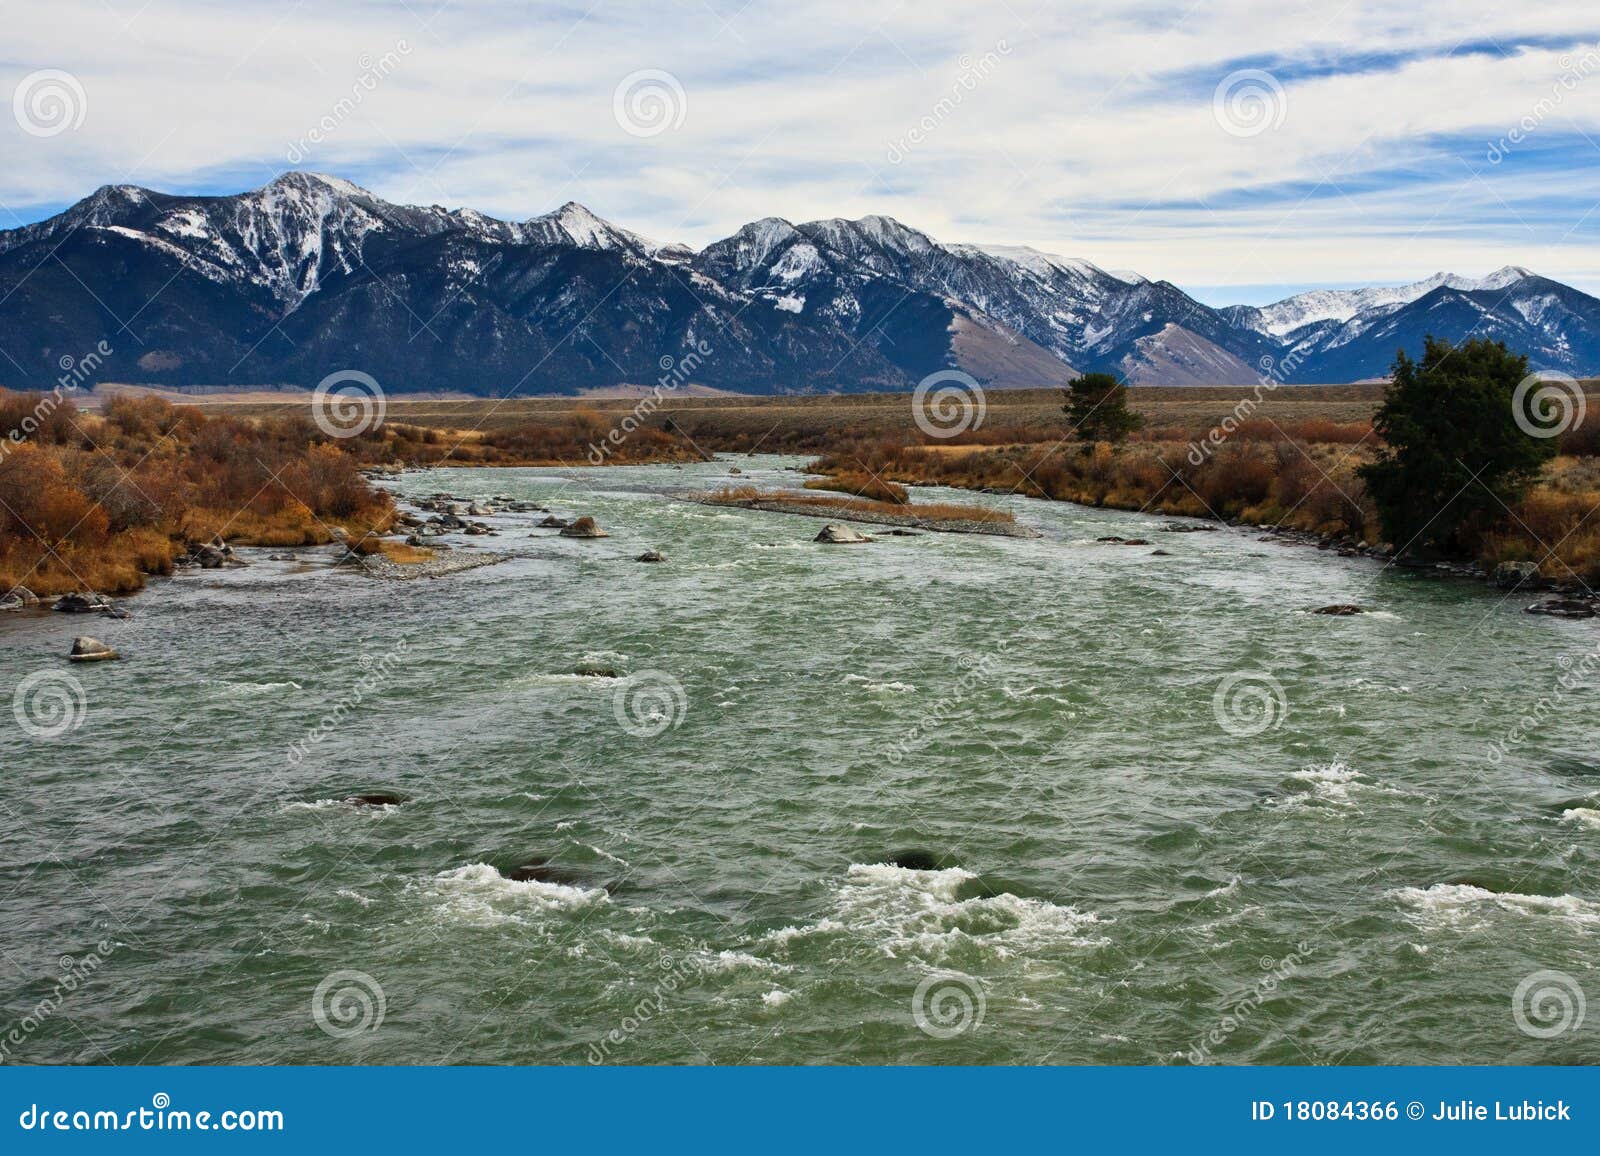 madison river and bridger mountains, montana.